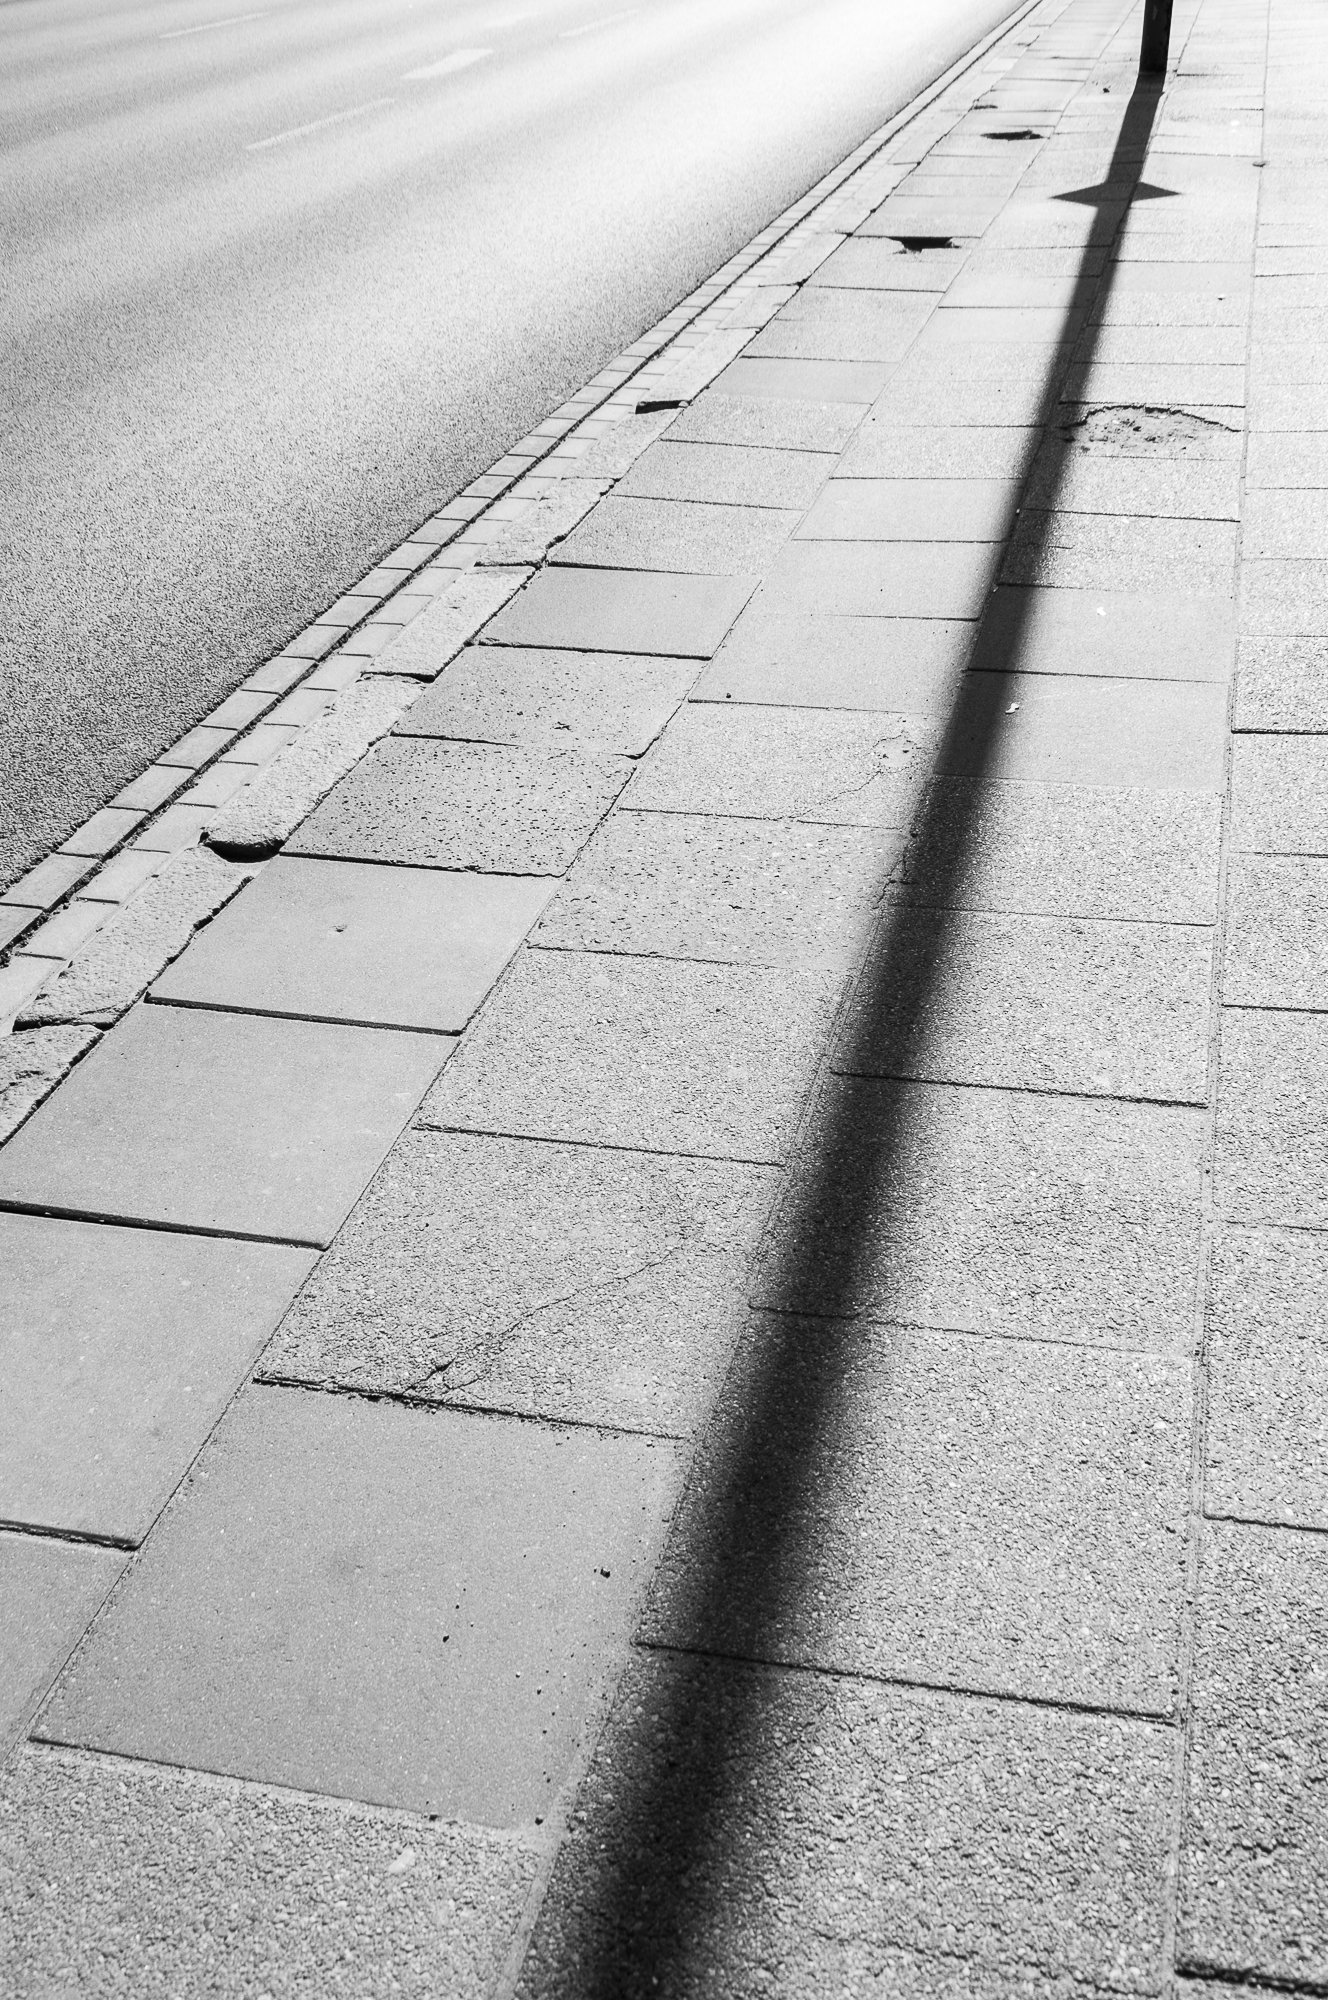 Adam Mazek Photography. Warsaw (Warszawa) 2018. Minimalism. Long shadow. Post: "Tough challenge."